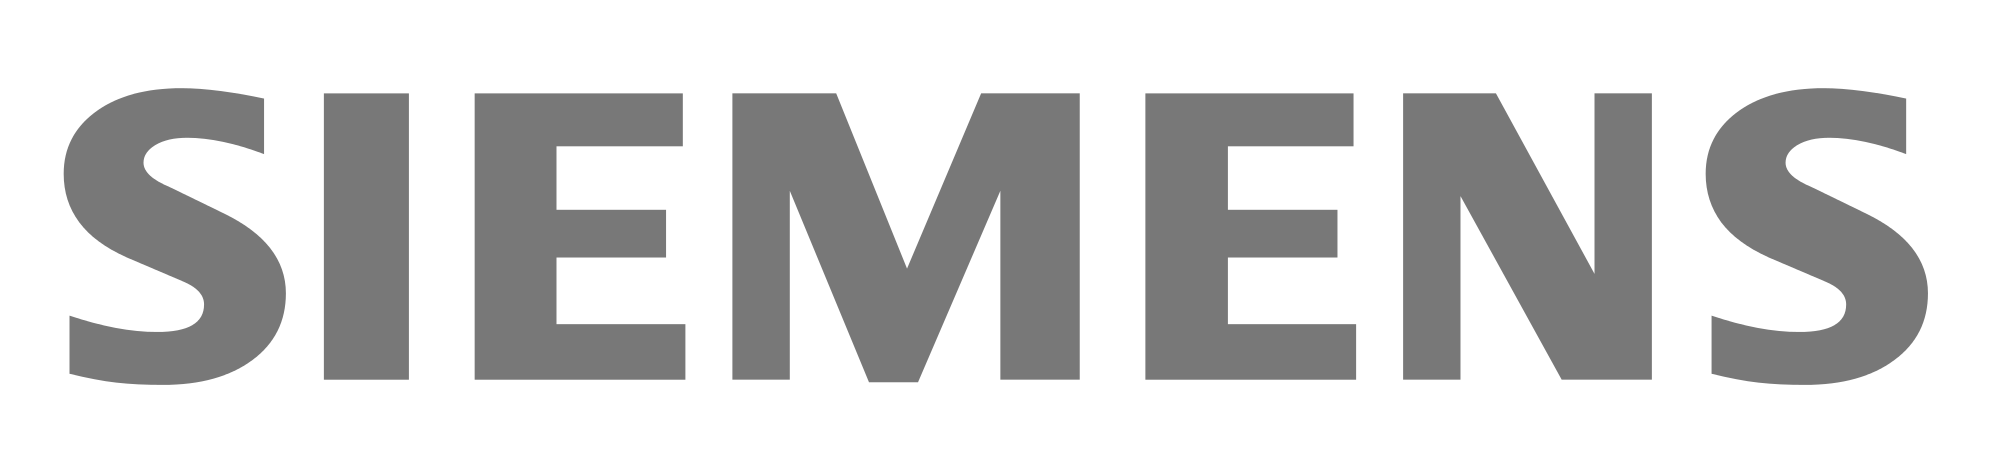 Logo-Siemens